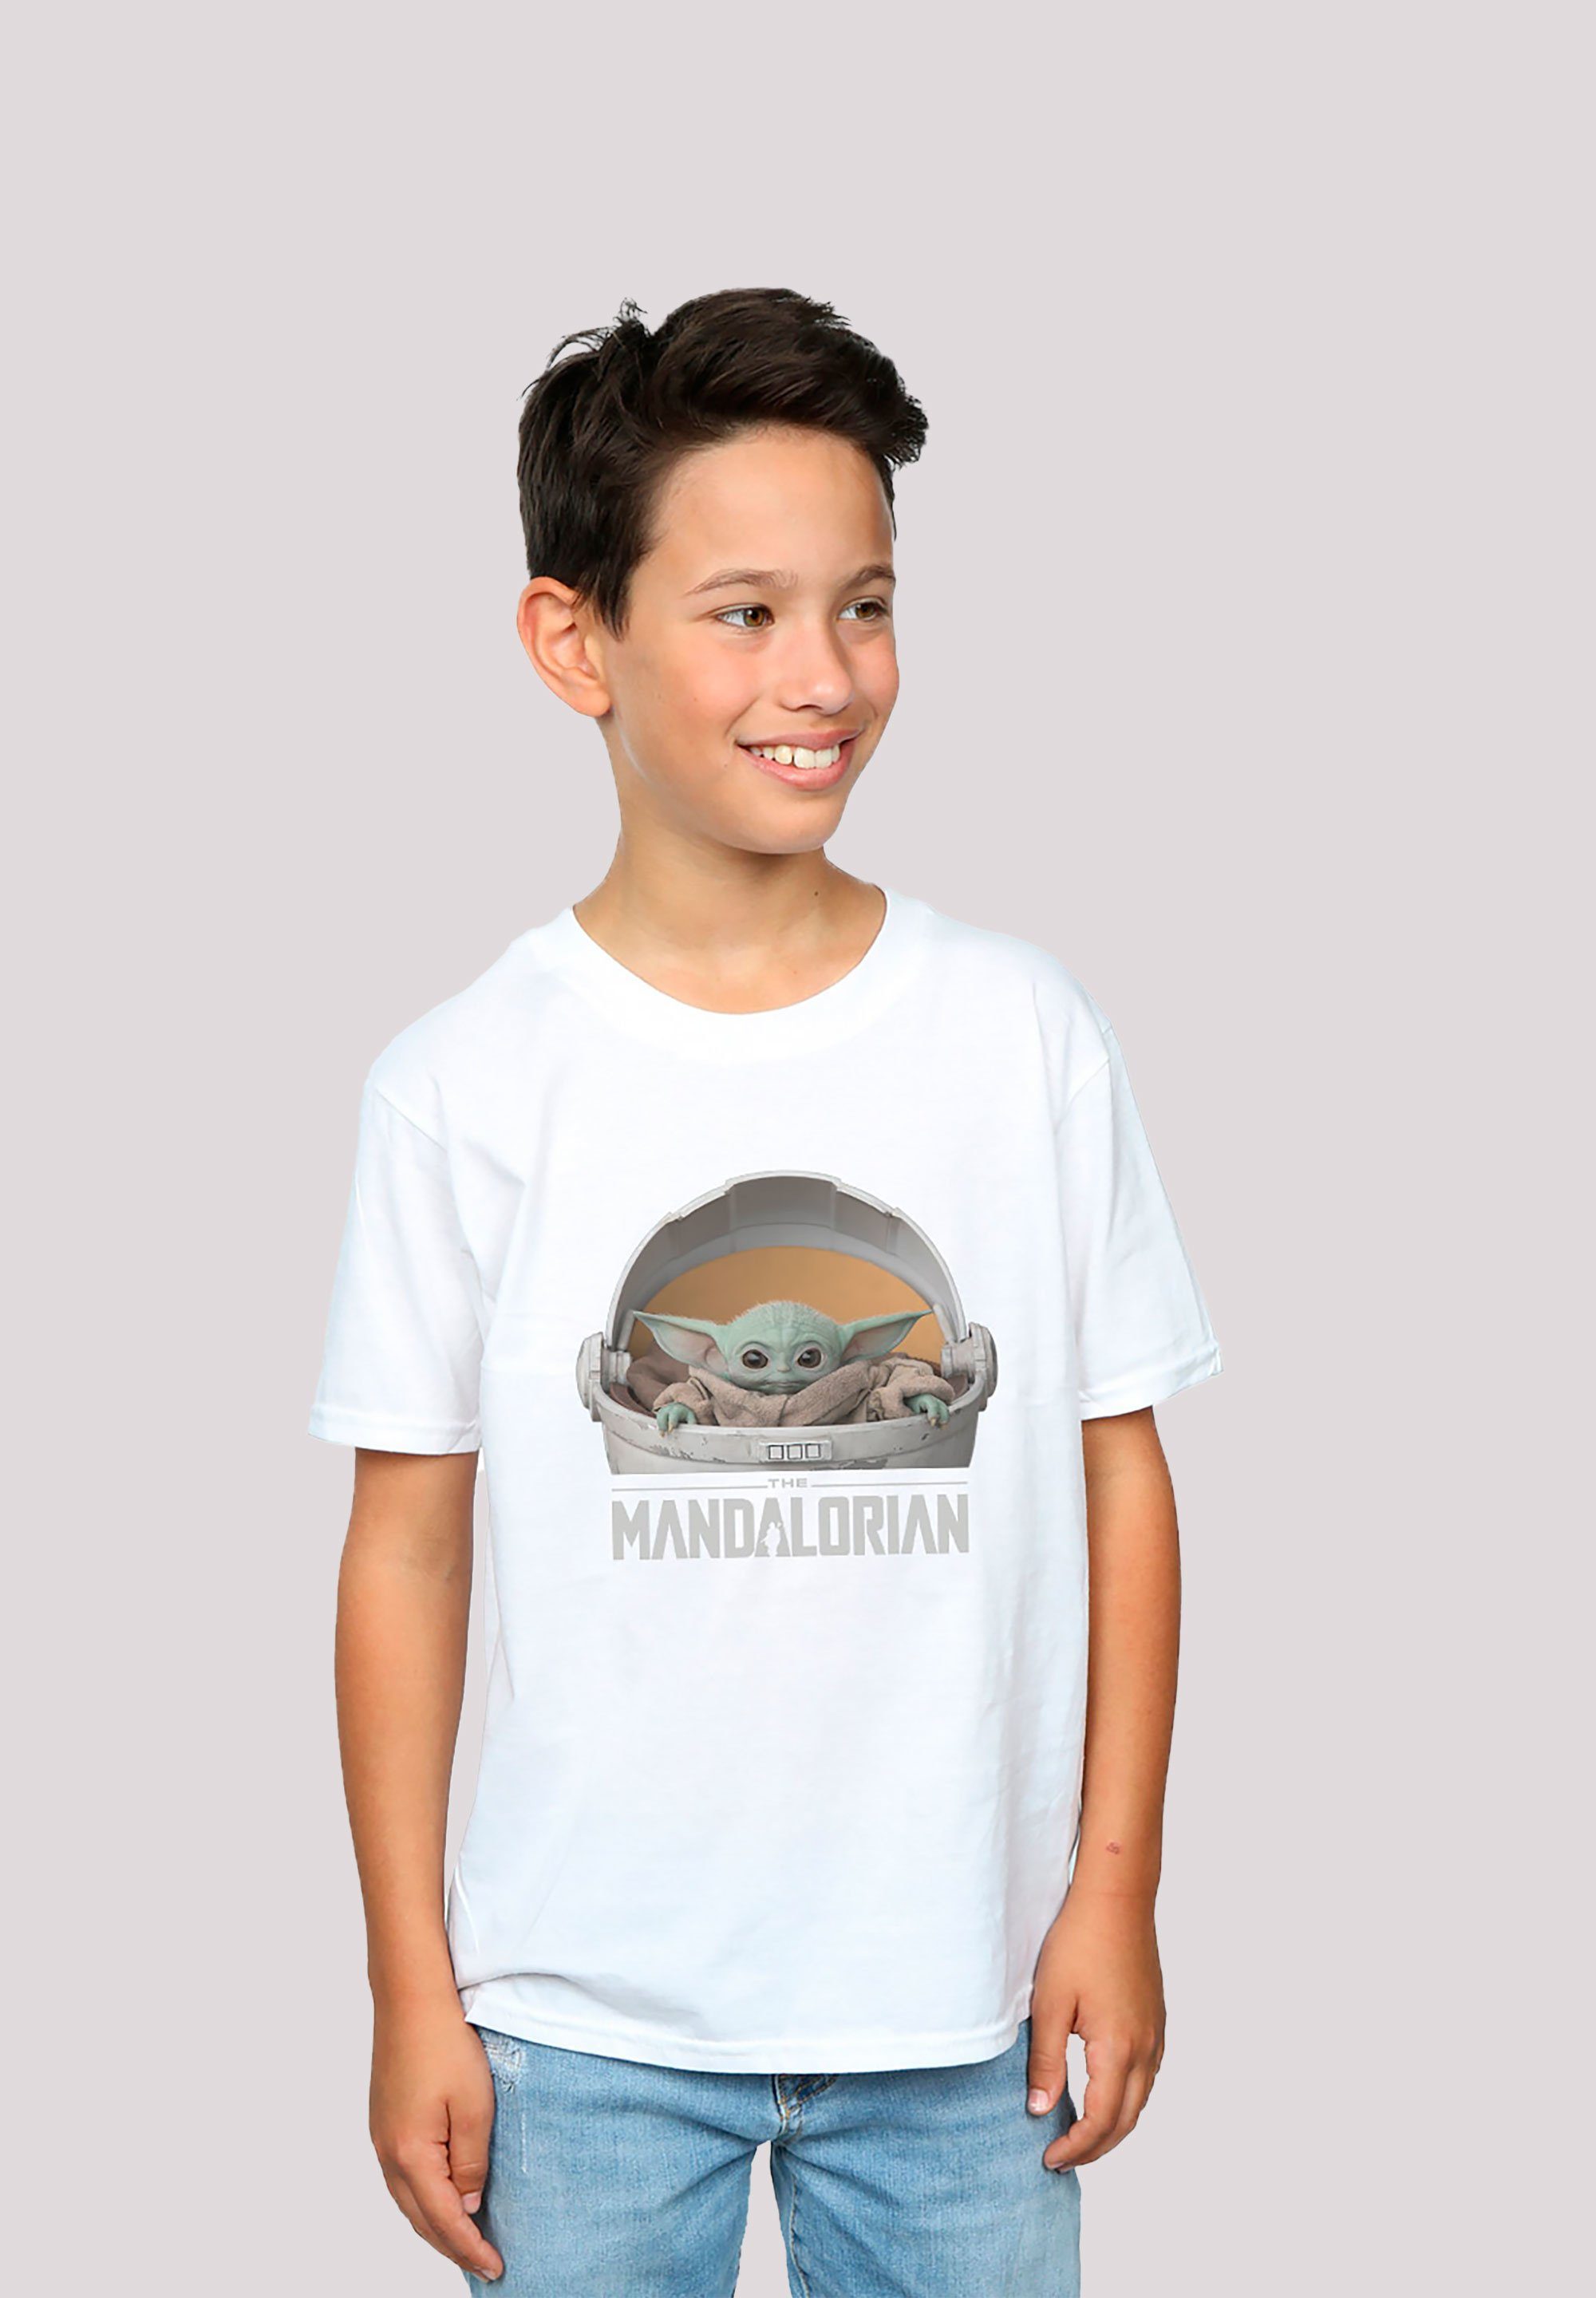 F4NT4STIC T-Shirt Baby weiß Wars The Yoda Print Mandalorian Star